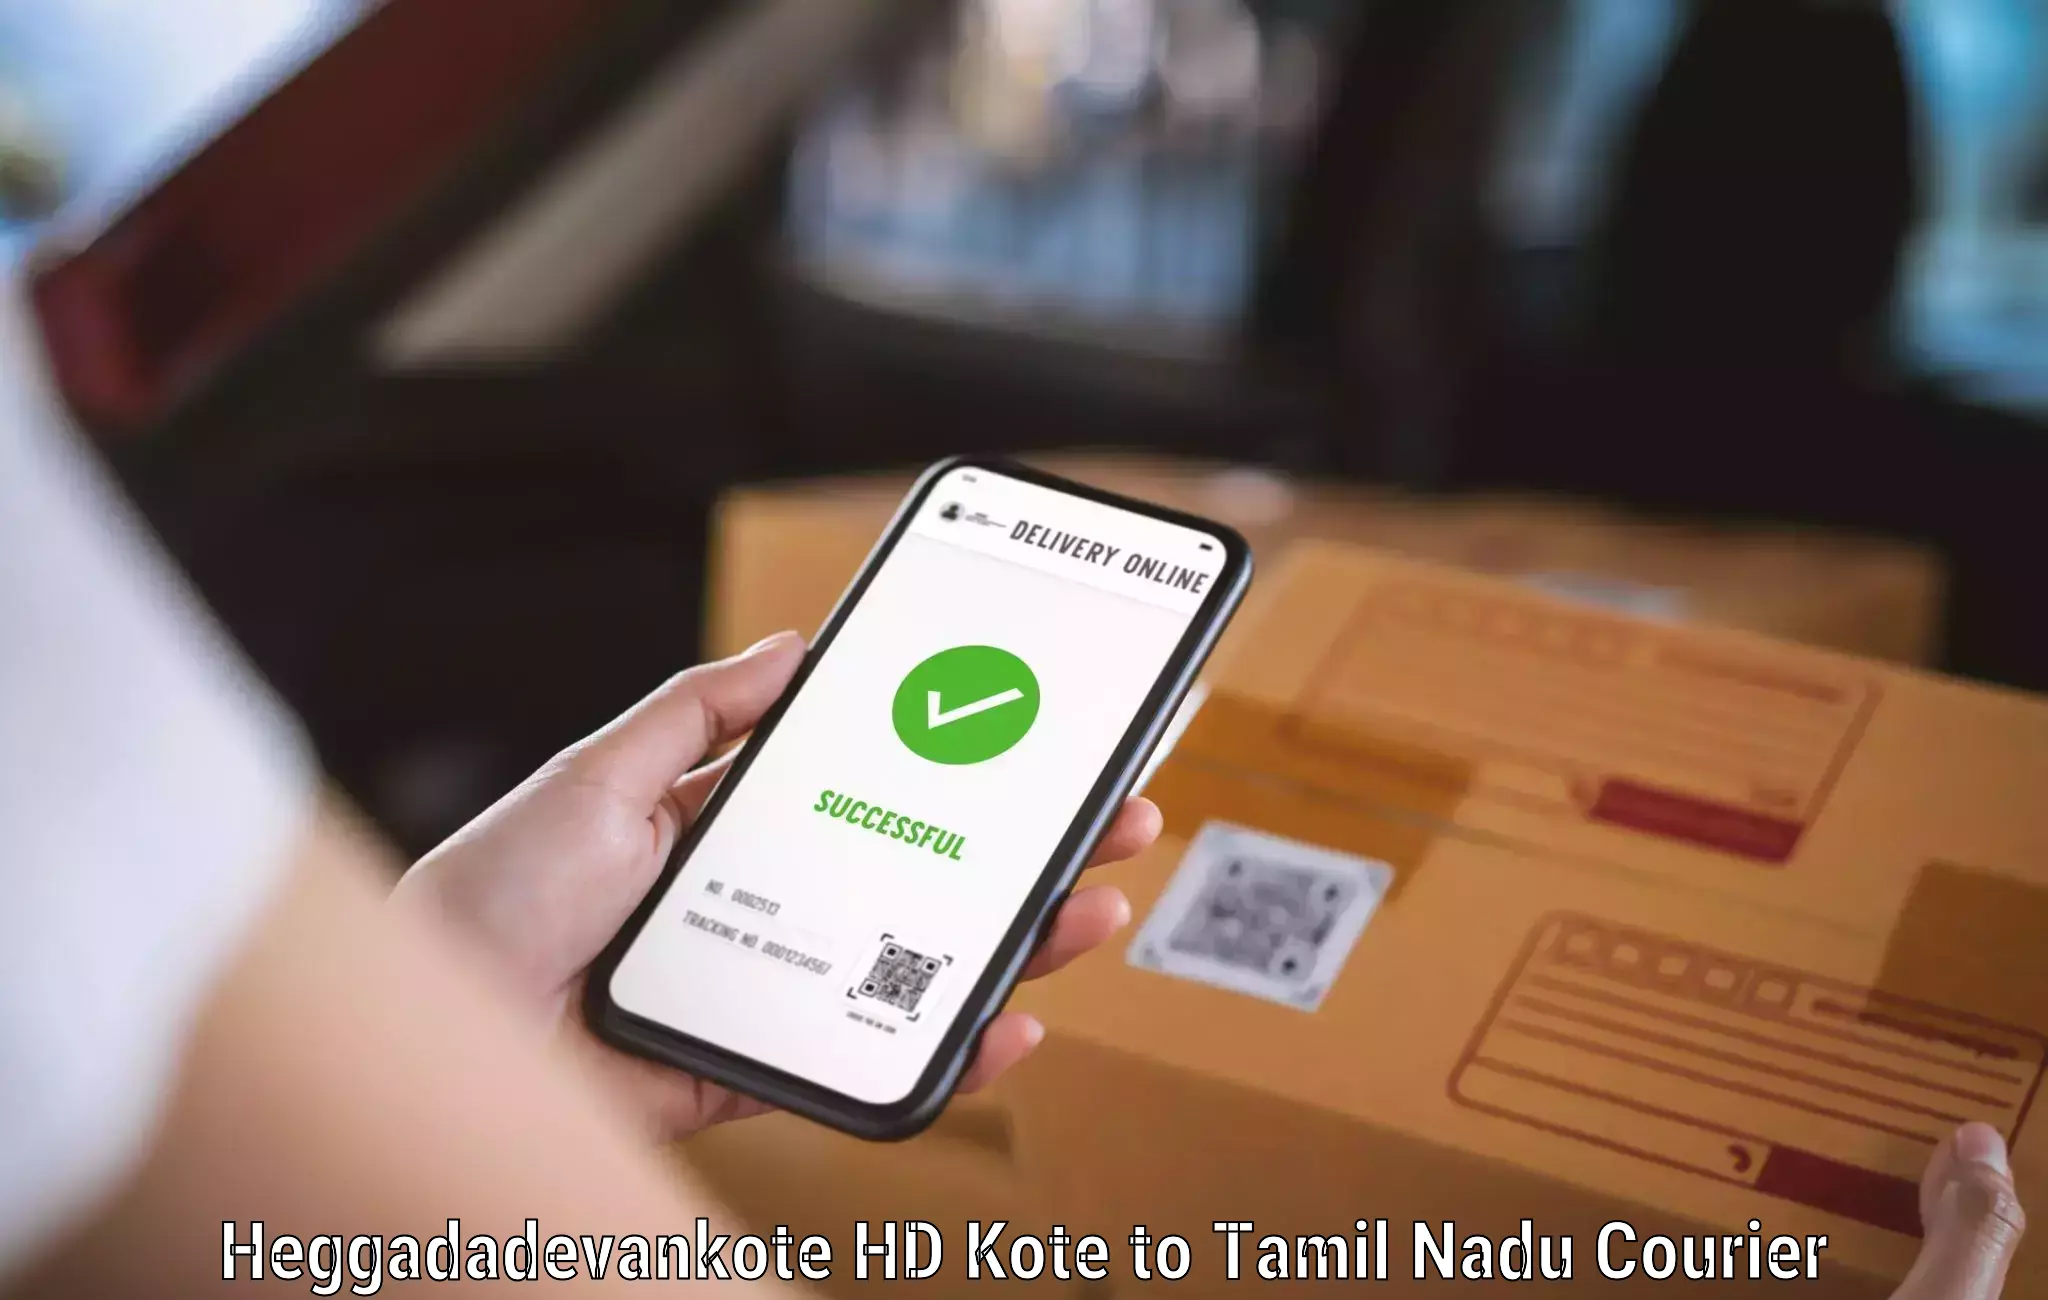 Parcel service for businesses Heggadadevankote HD Kote to Tamil Nadu